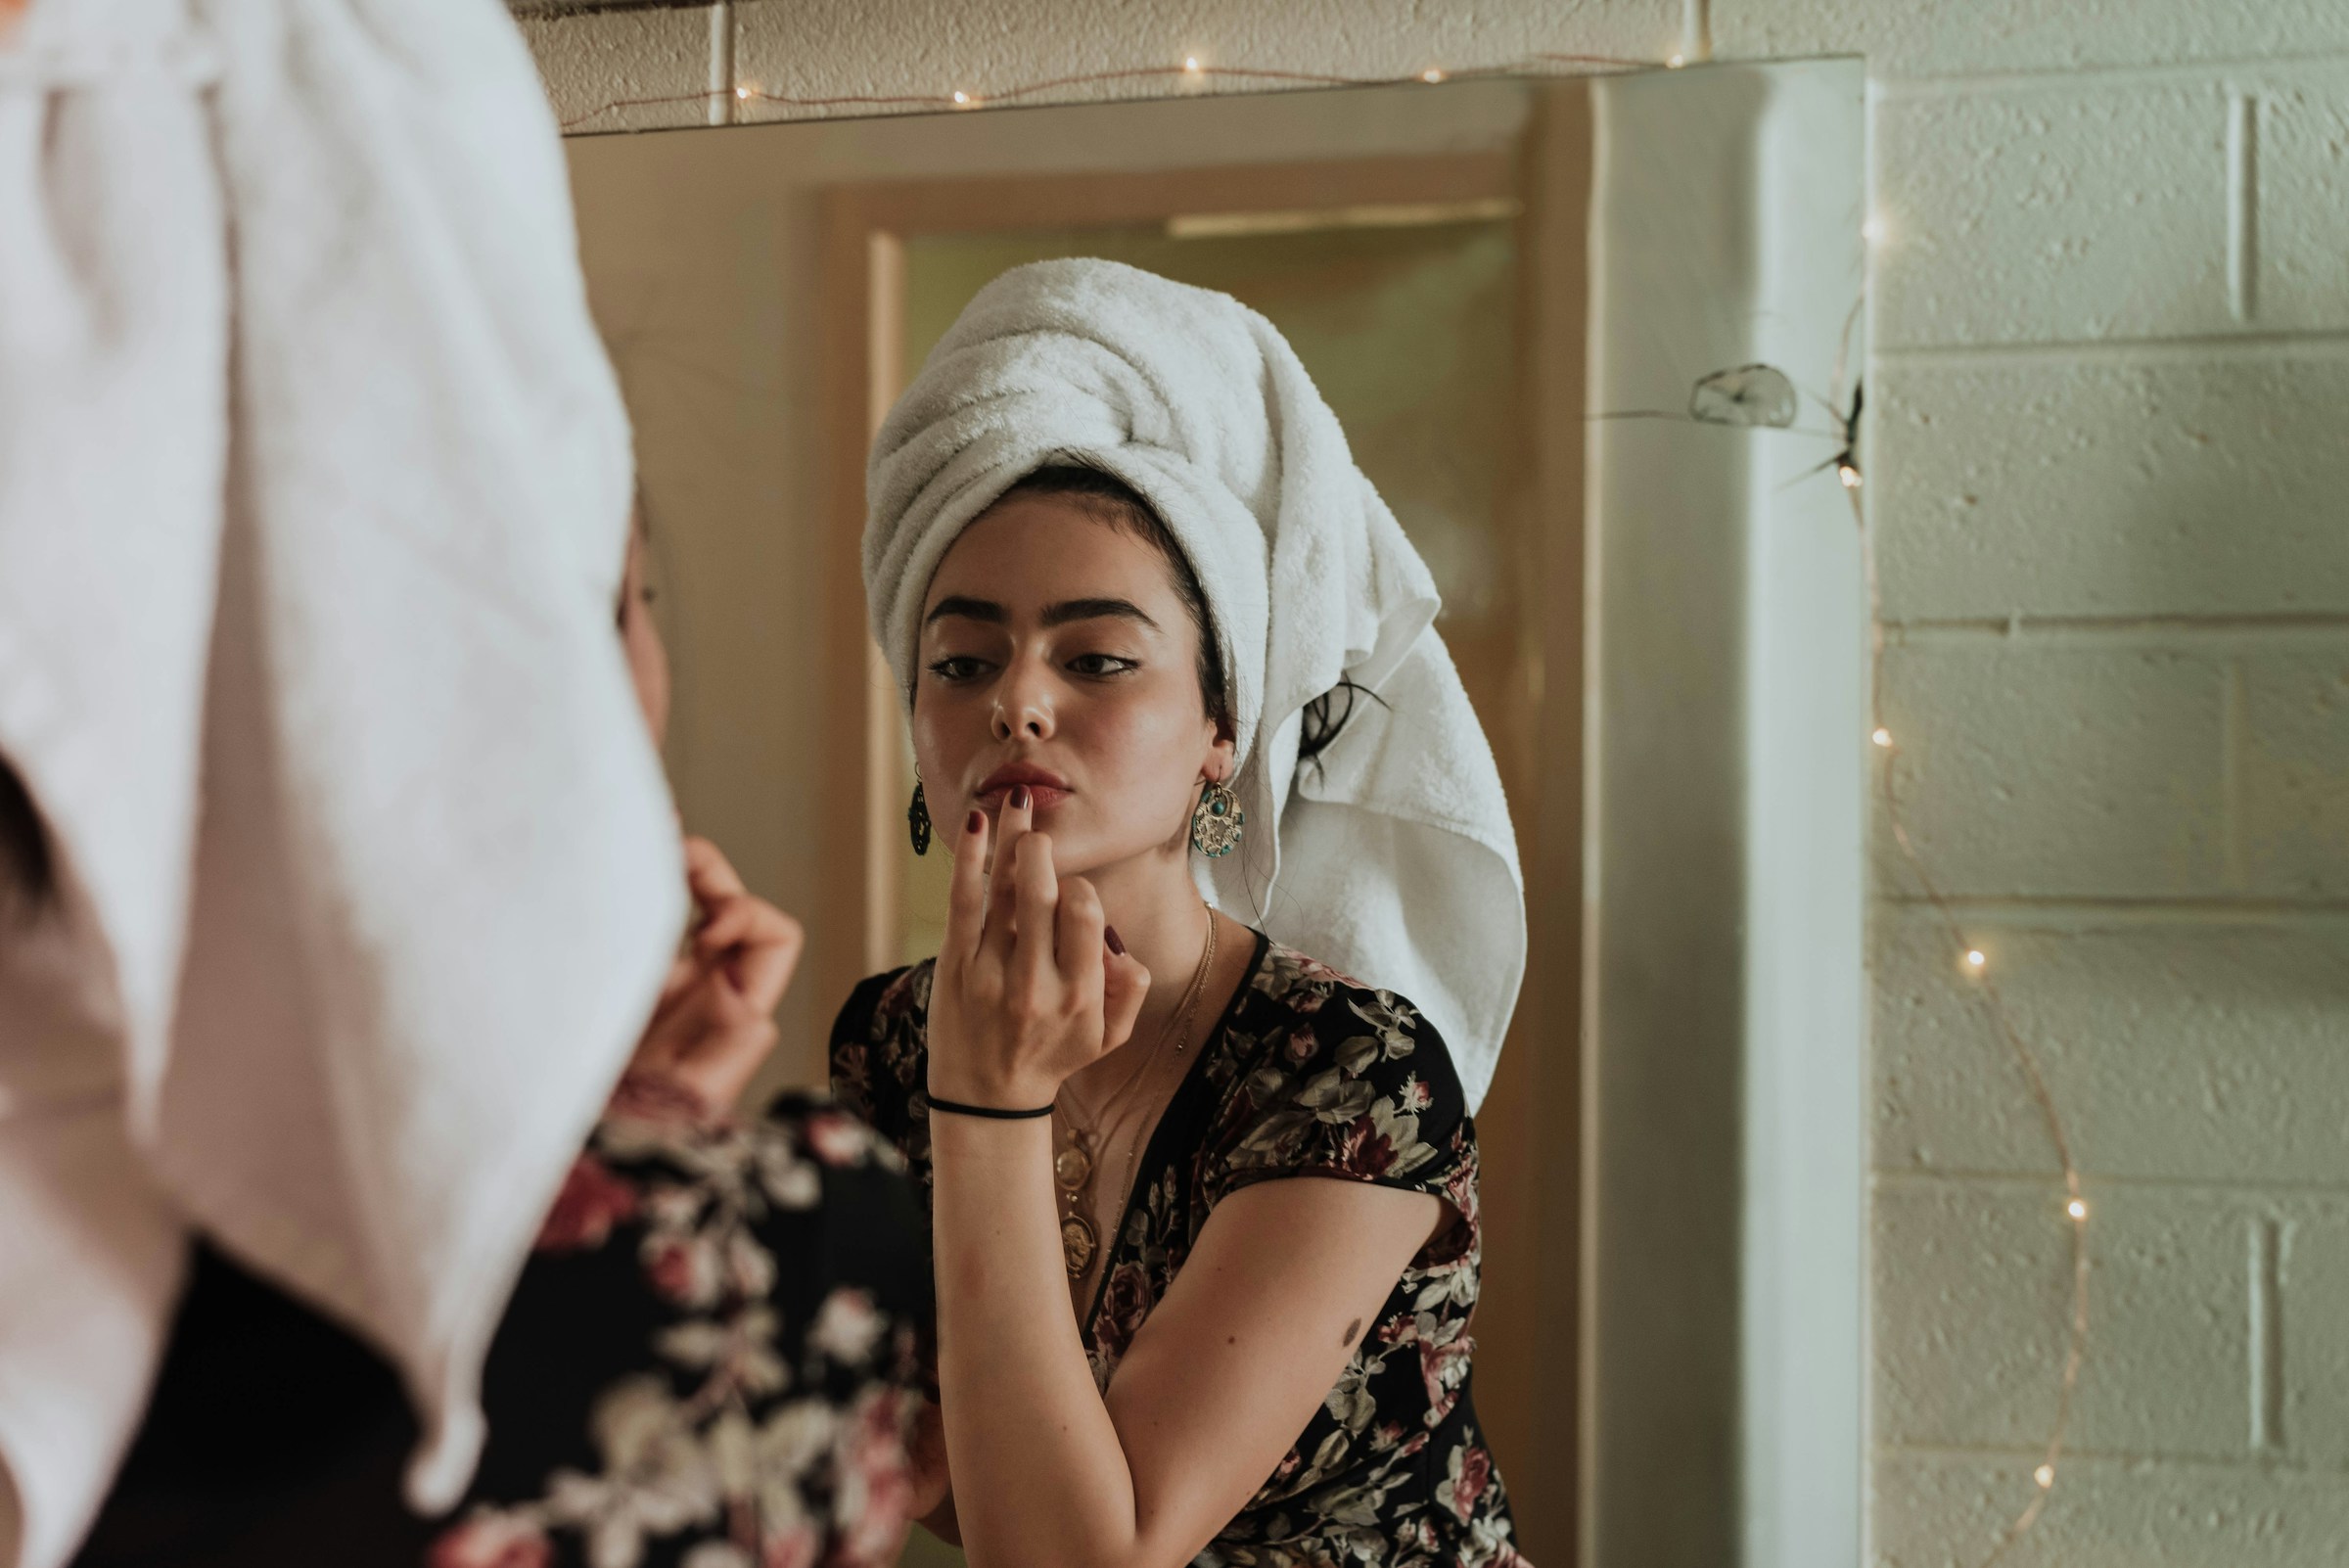 A woman putting on makeup | Source: Unsplash